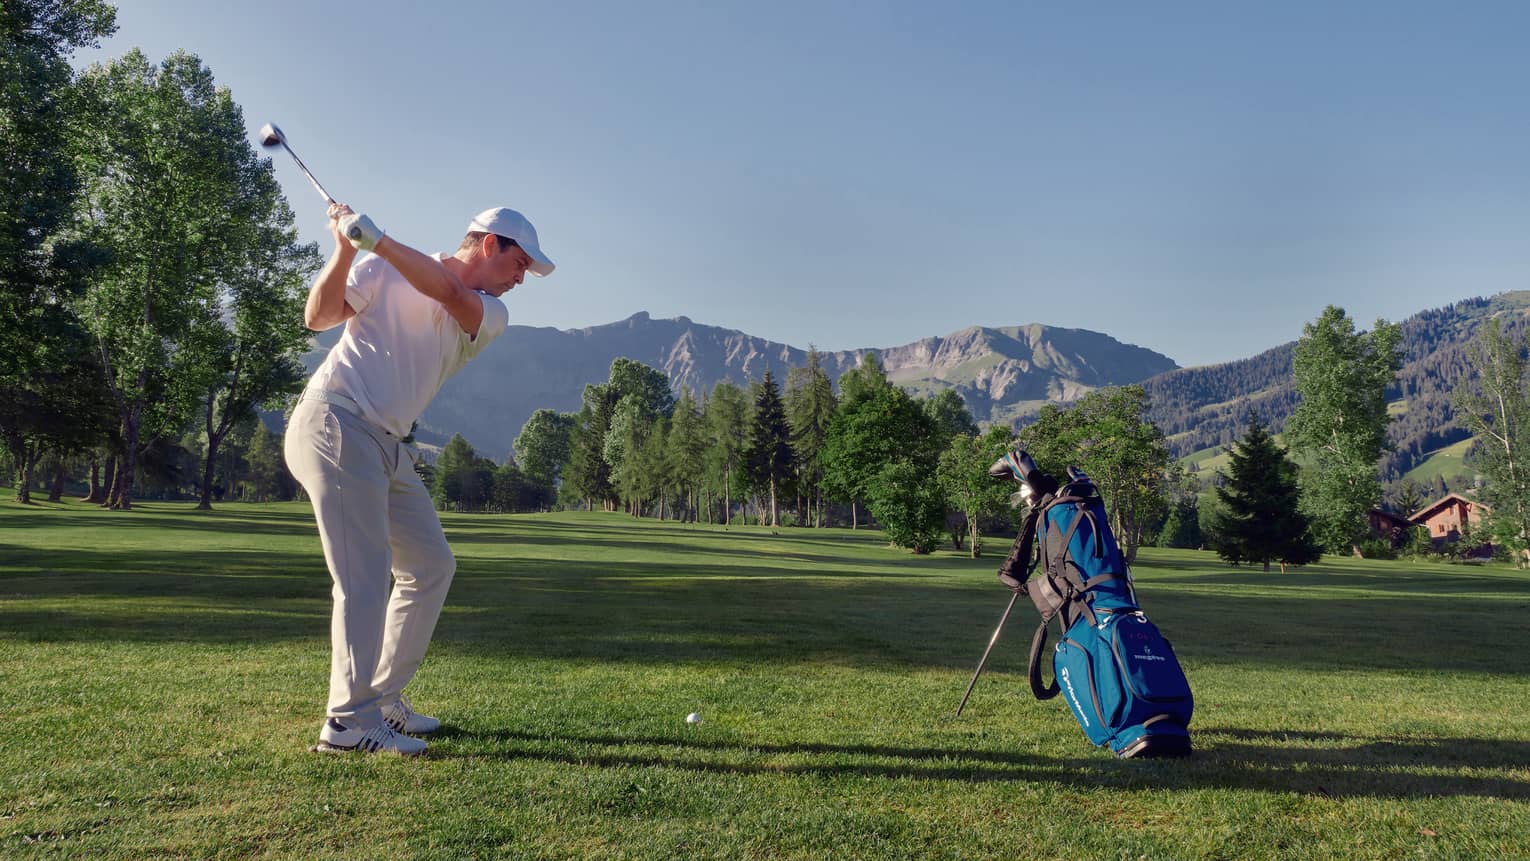 Man on mountainside golf course swings to hit golf ball beside blue golf bag